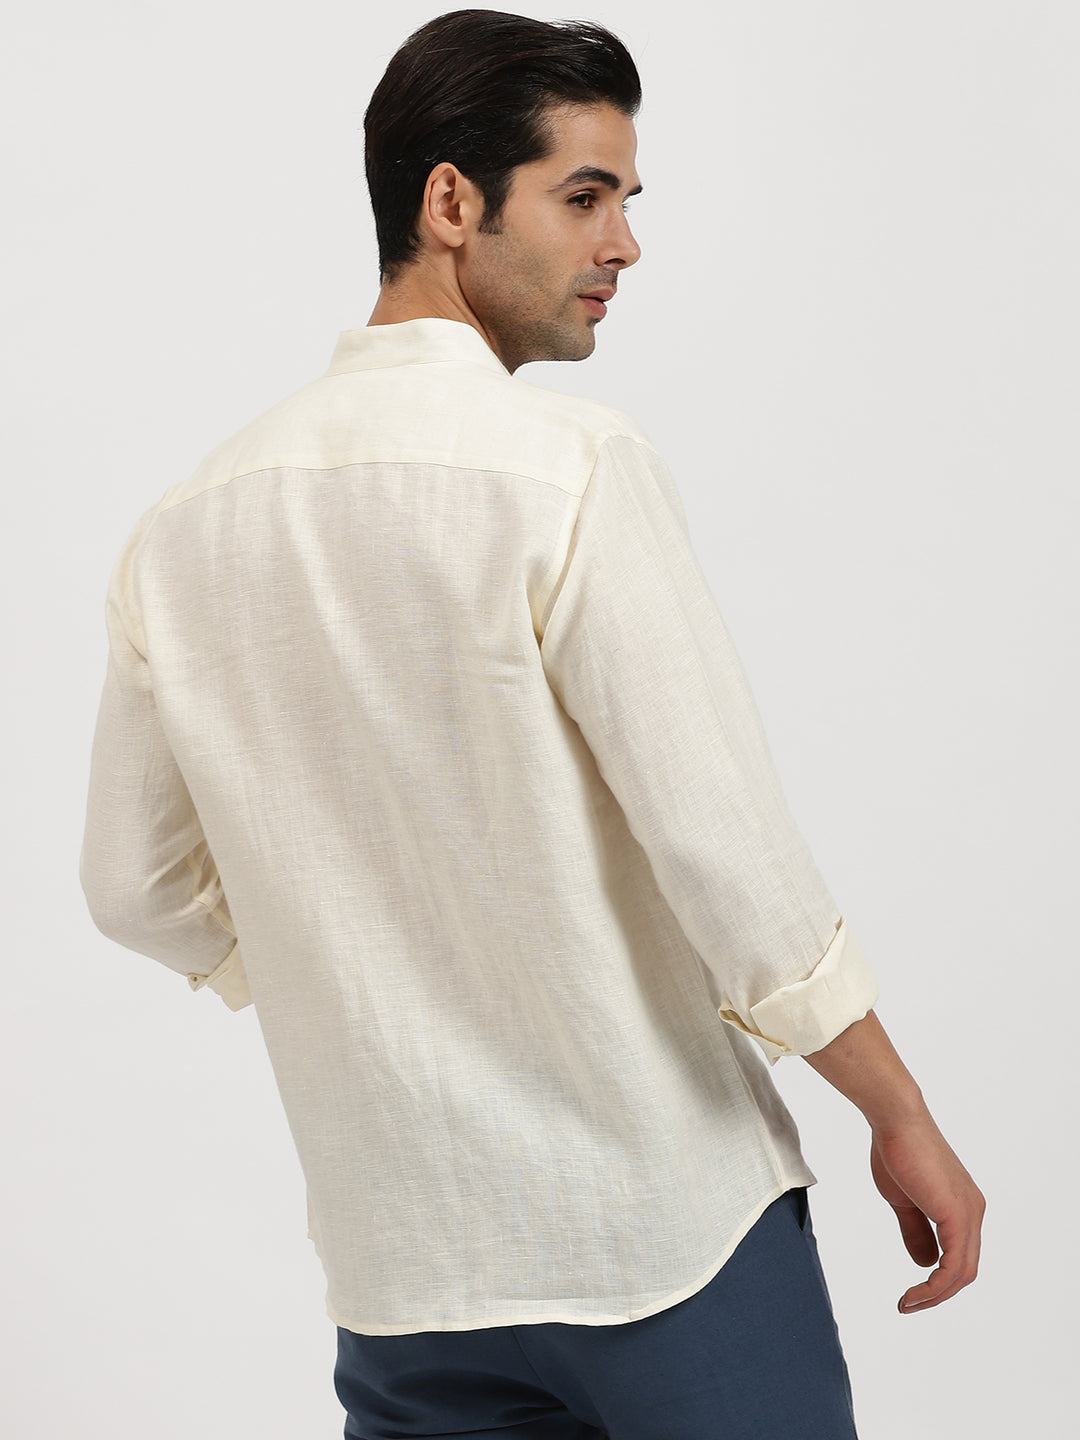 Craig - Pure Linen V Neck Full Sleeve Shirt - Ivory